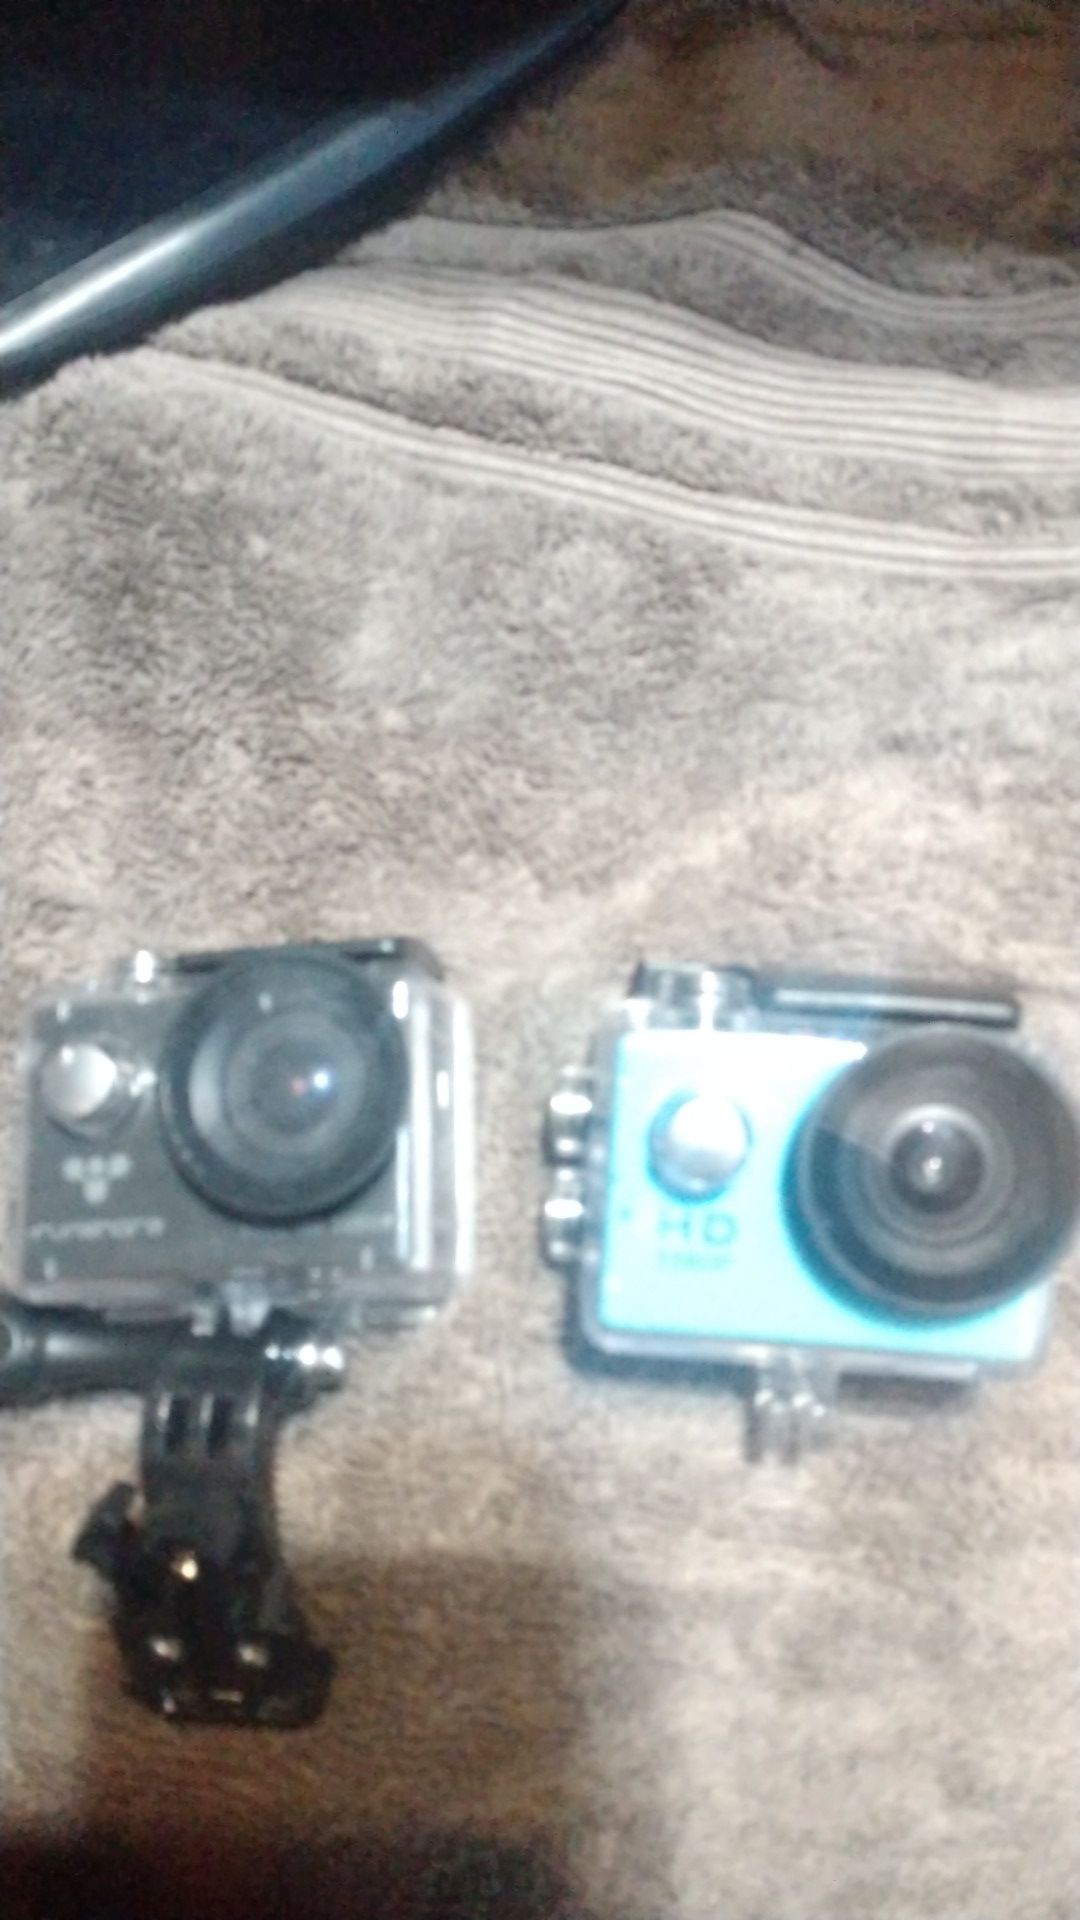 GoPro style cameras